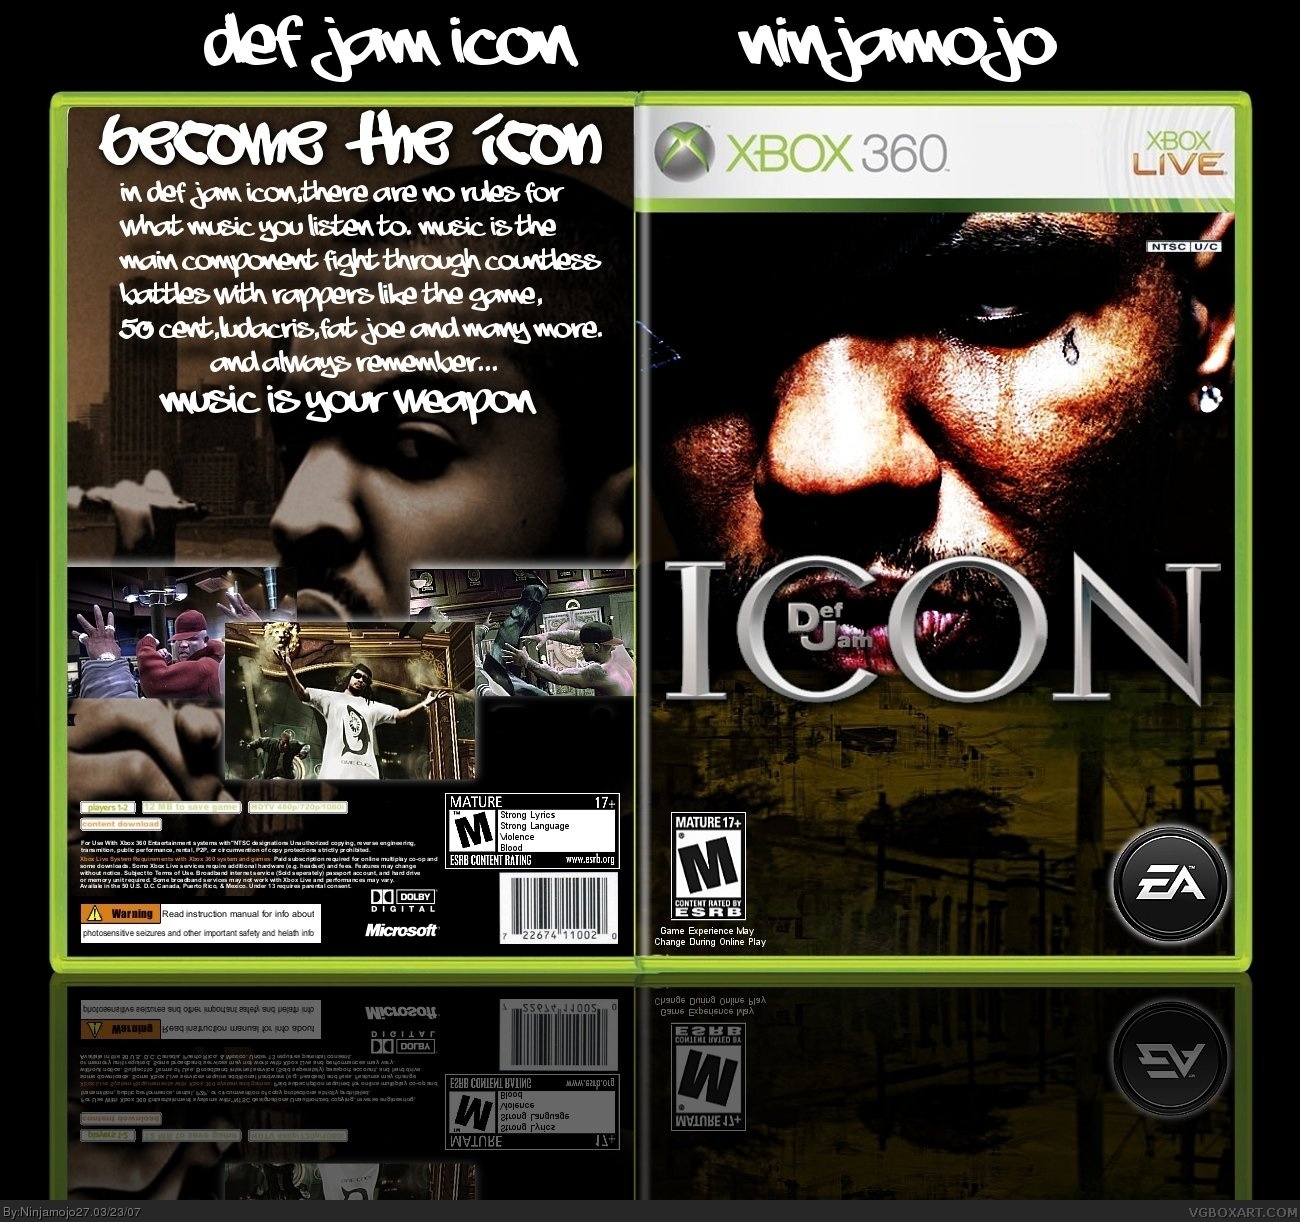 Def Jam ICON box cover